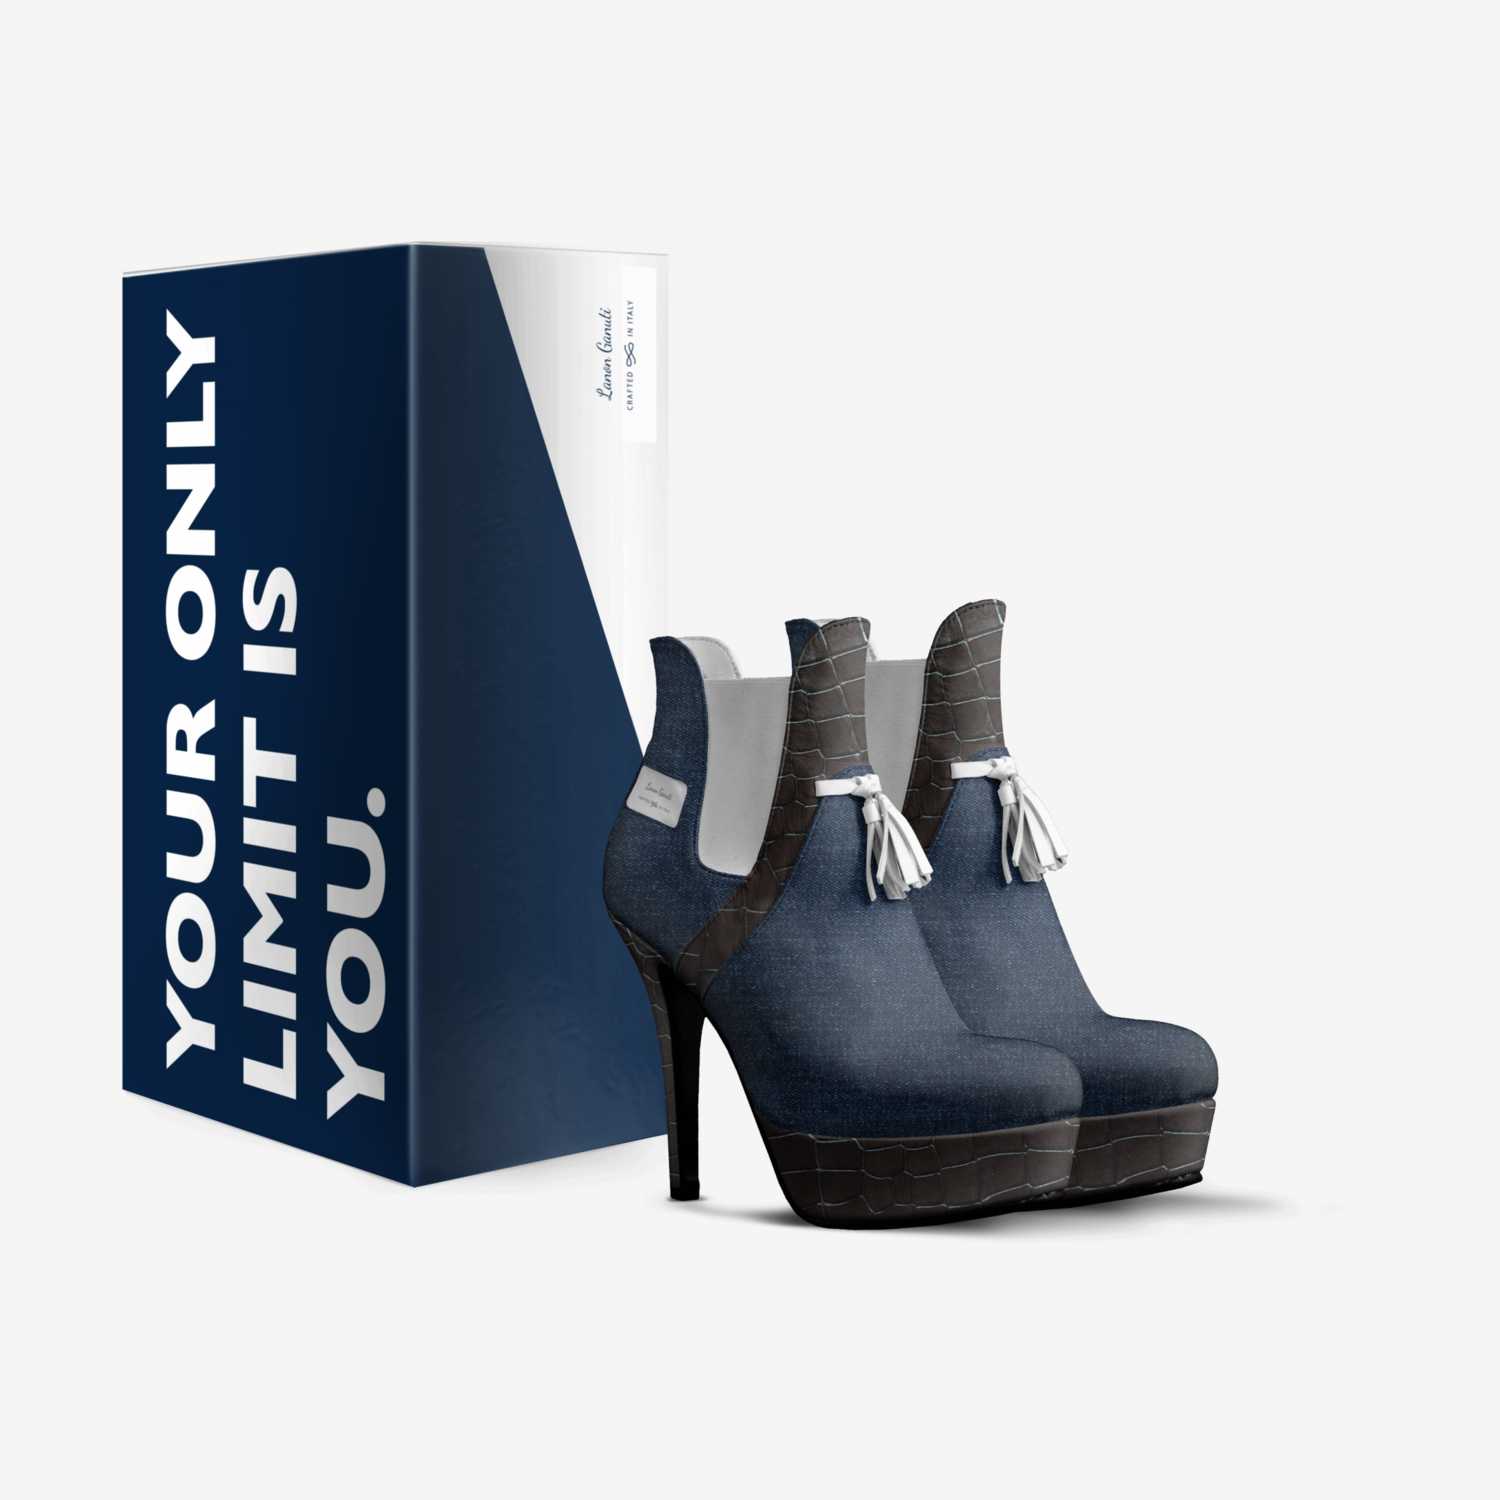 Icecream custom made in Italy shoes by Lanon Ganuti | Box view